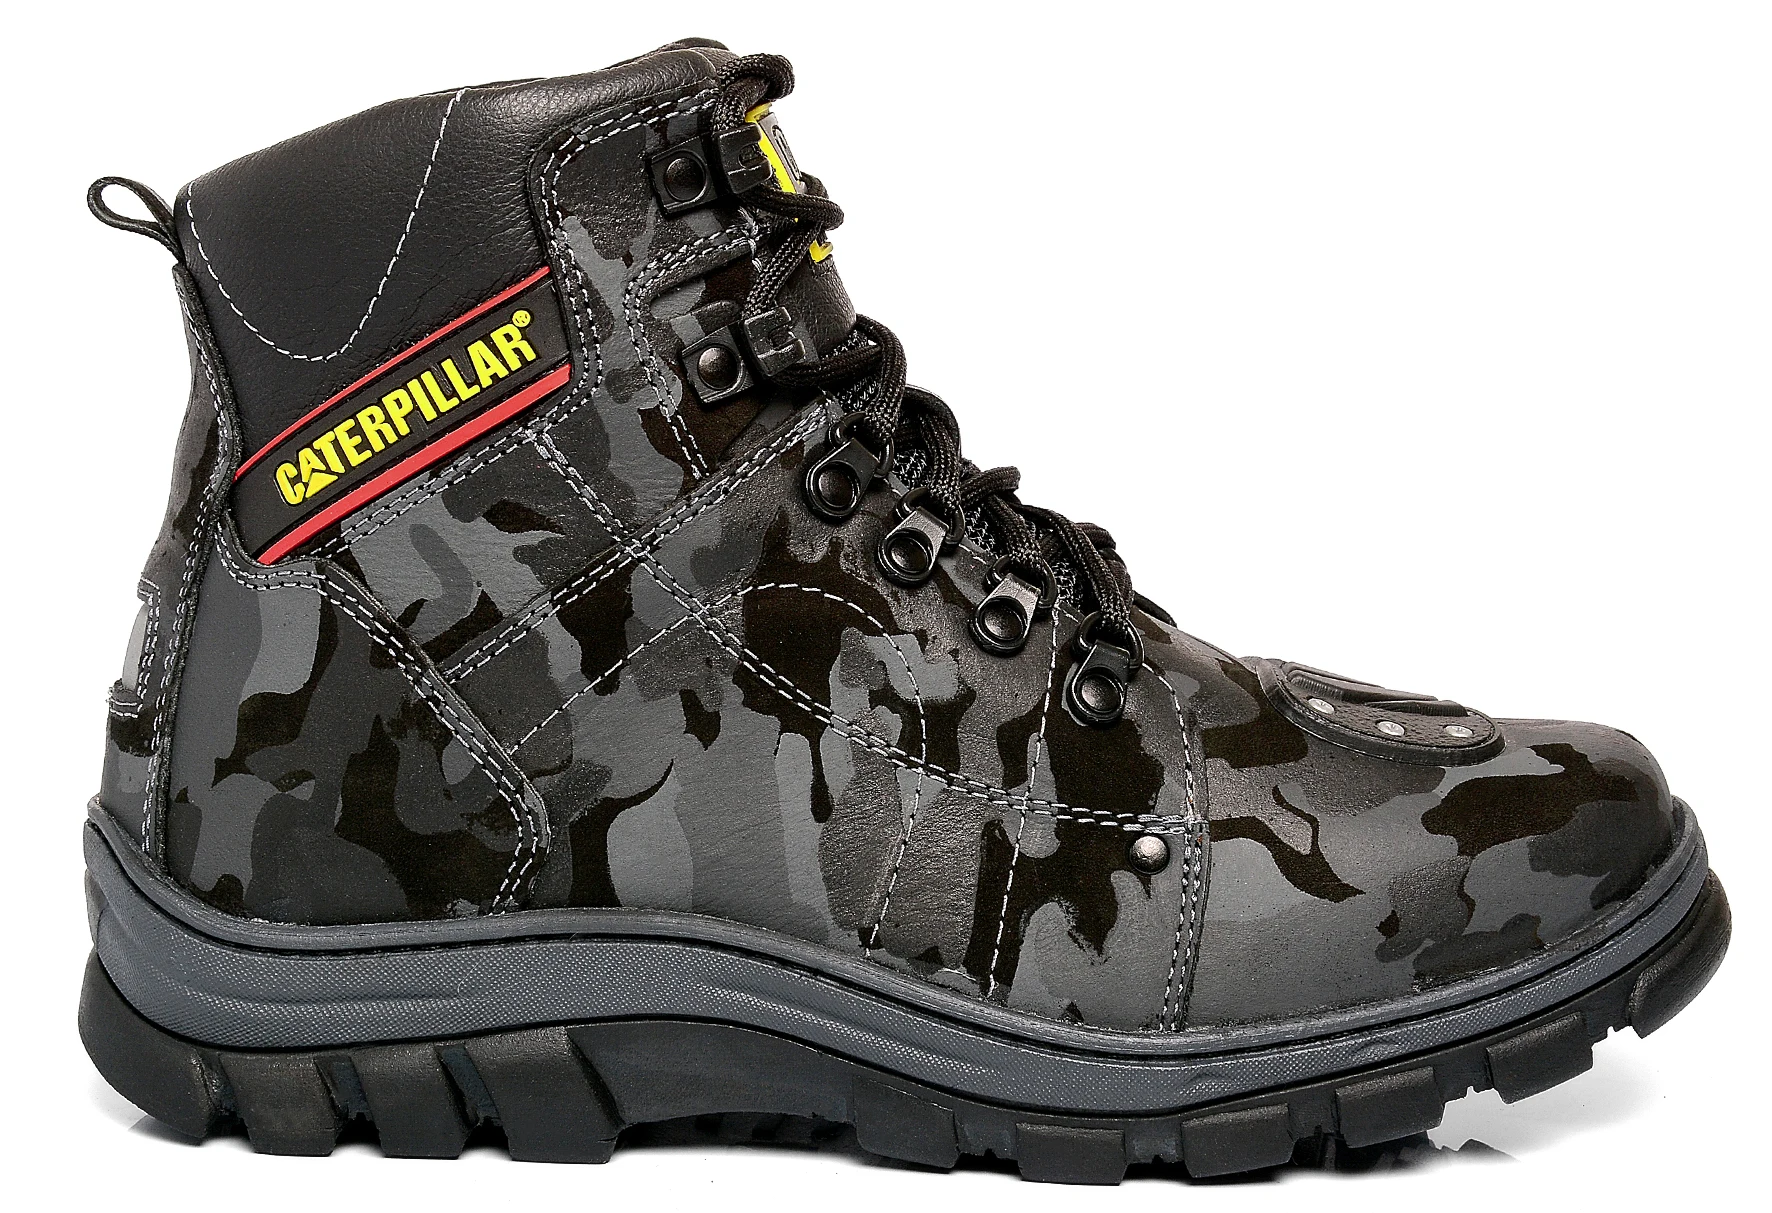 Caterpillar Men's Boot 100% Long Cano Leather C/ Gel - Men's Boots -  AliExpress